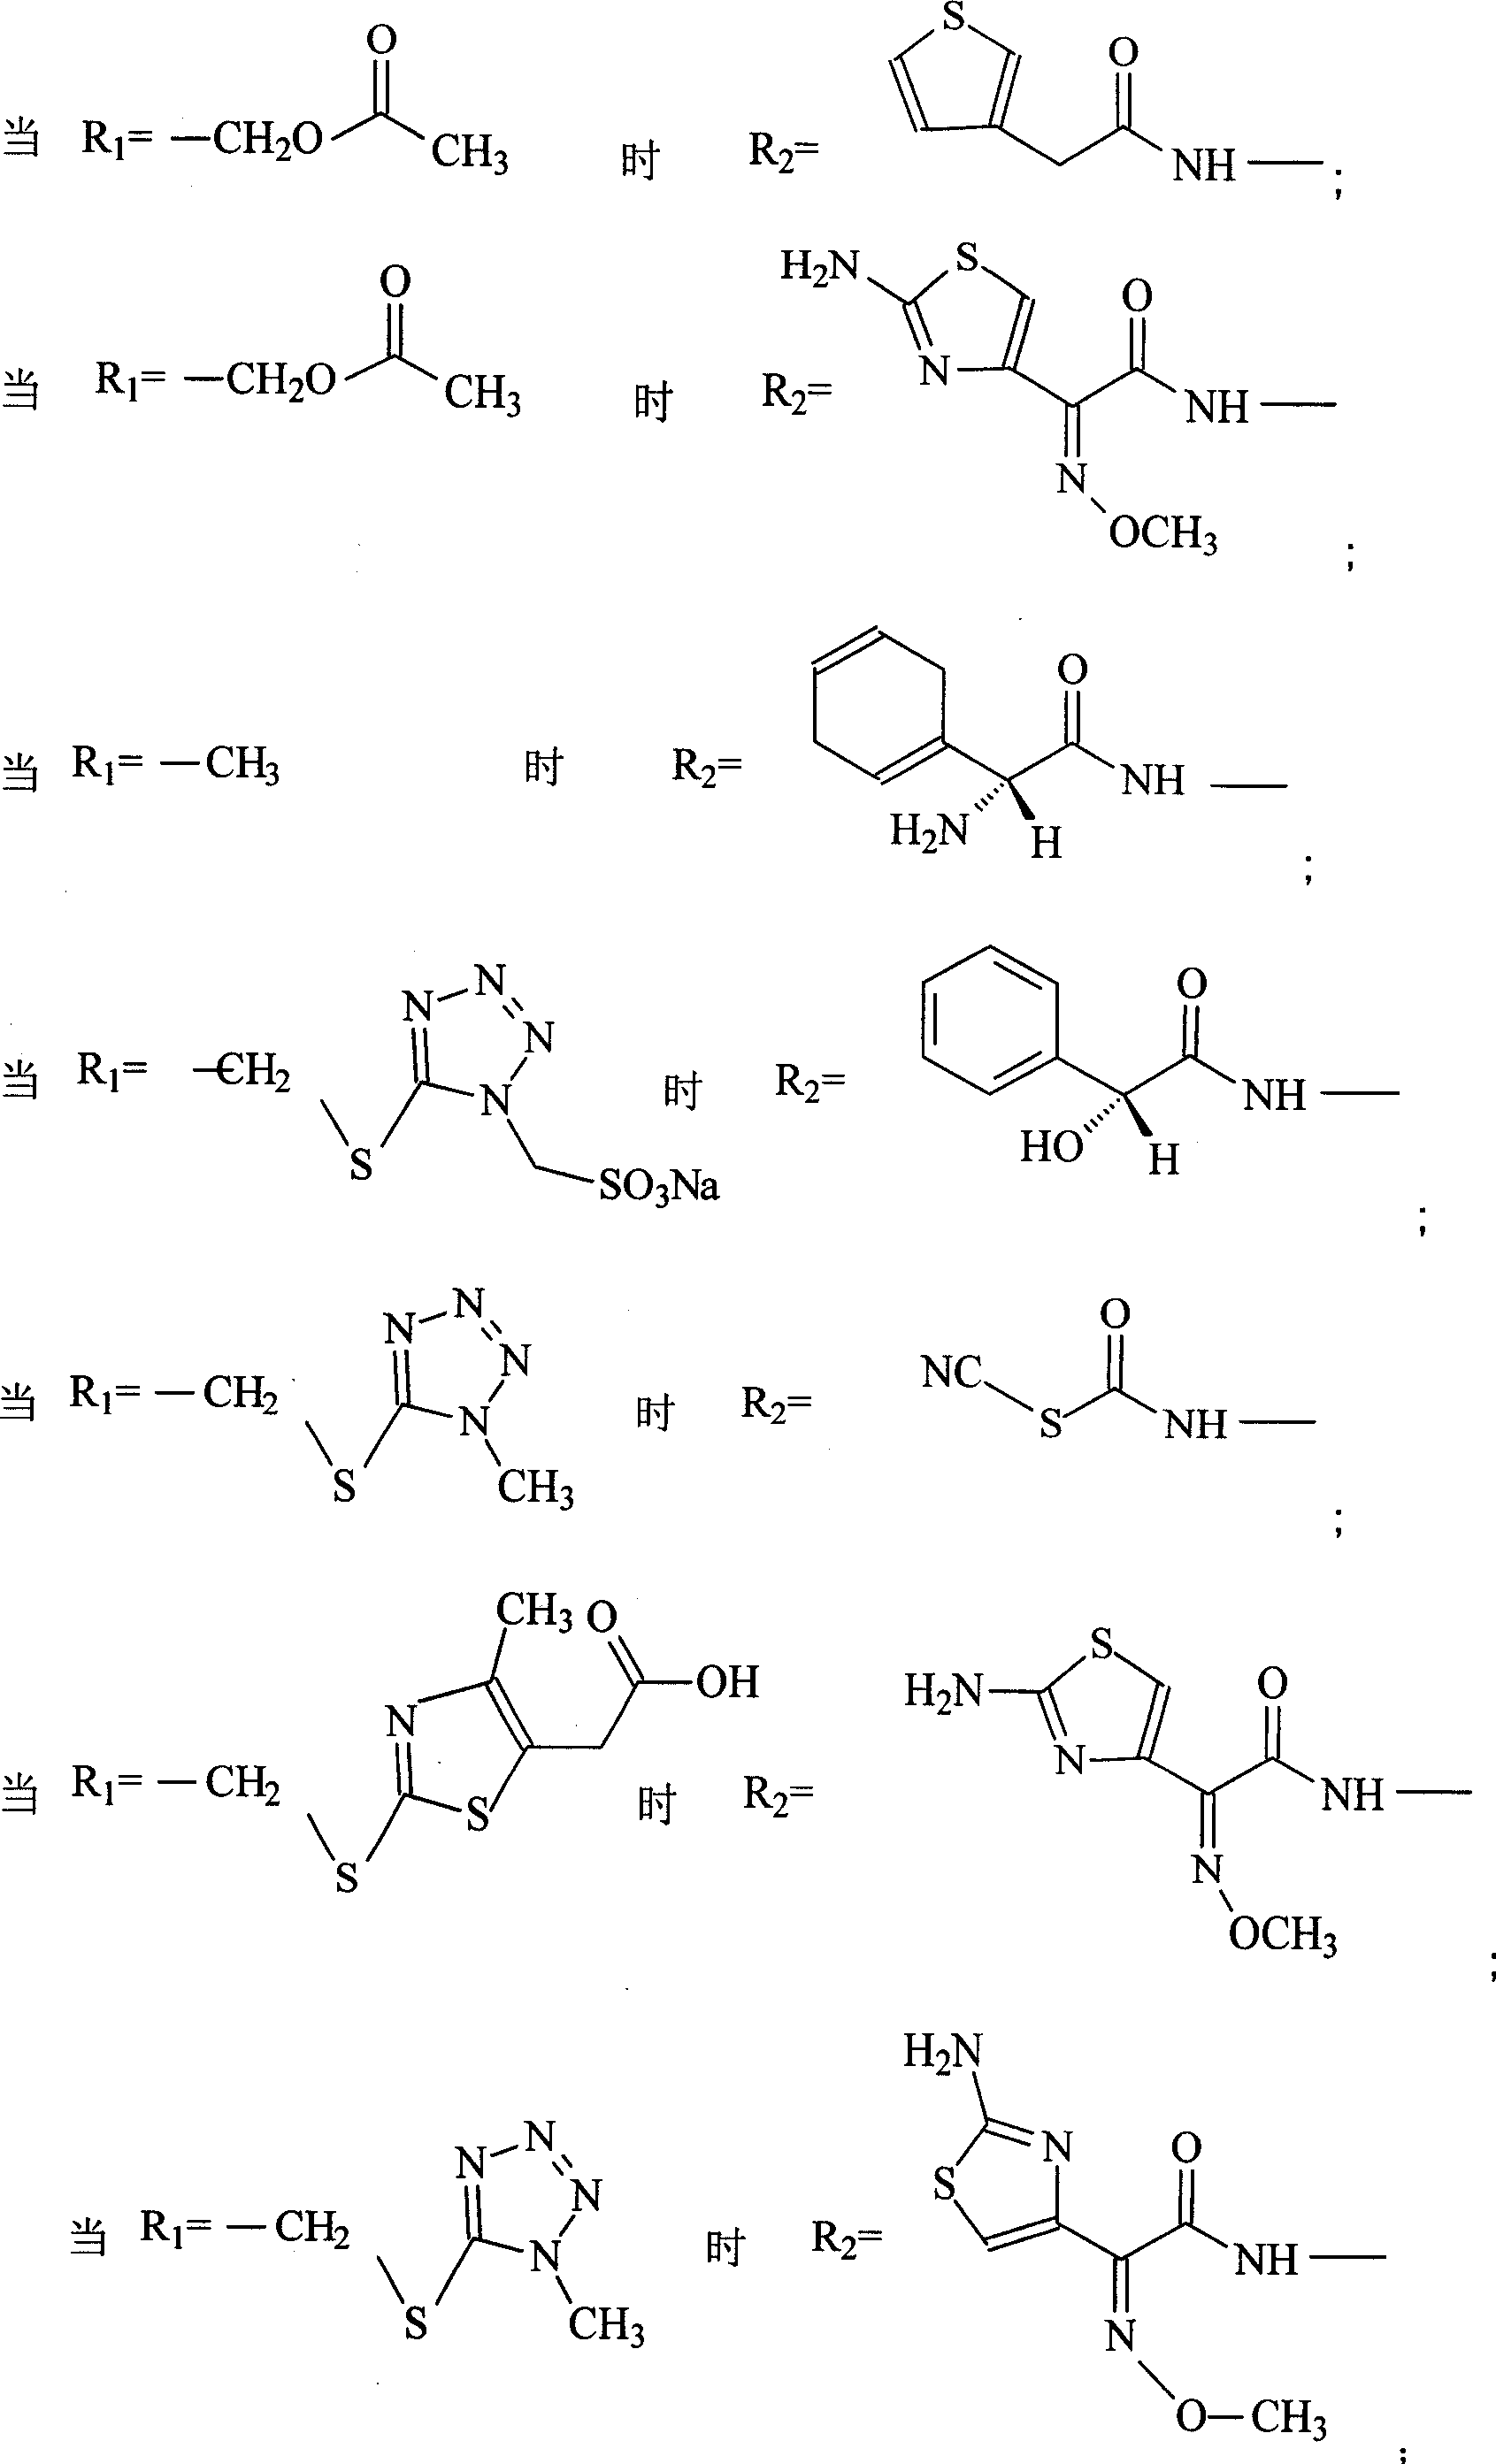 Organic amine salt of cephalosporin compound and its preparation method